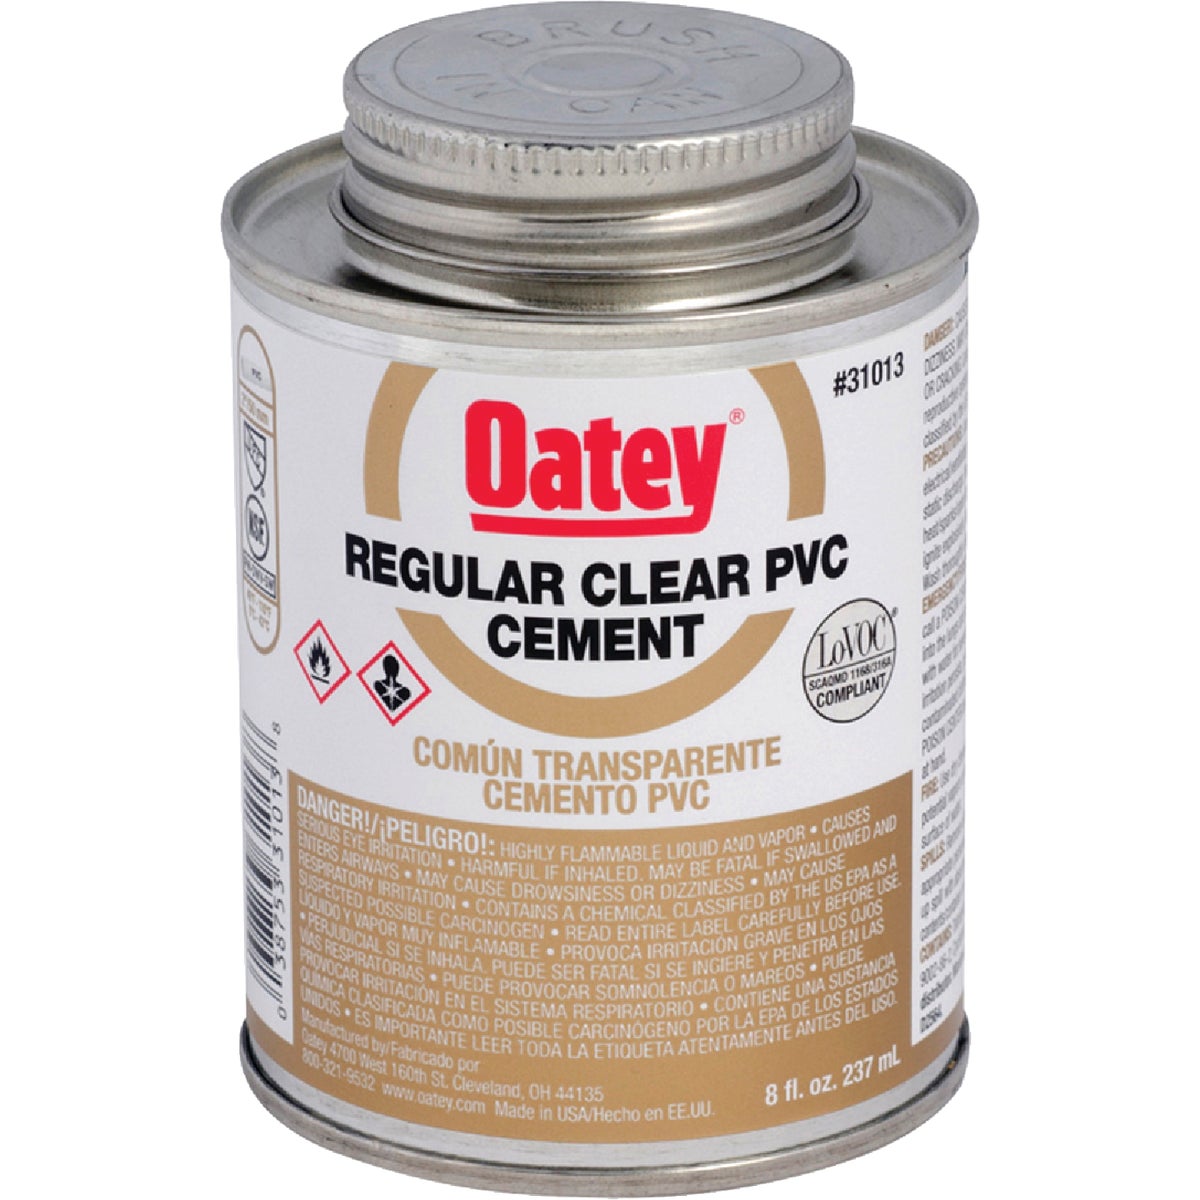 Oatey 8 Oz. Regular Bodied Clear PVC Cement